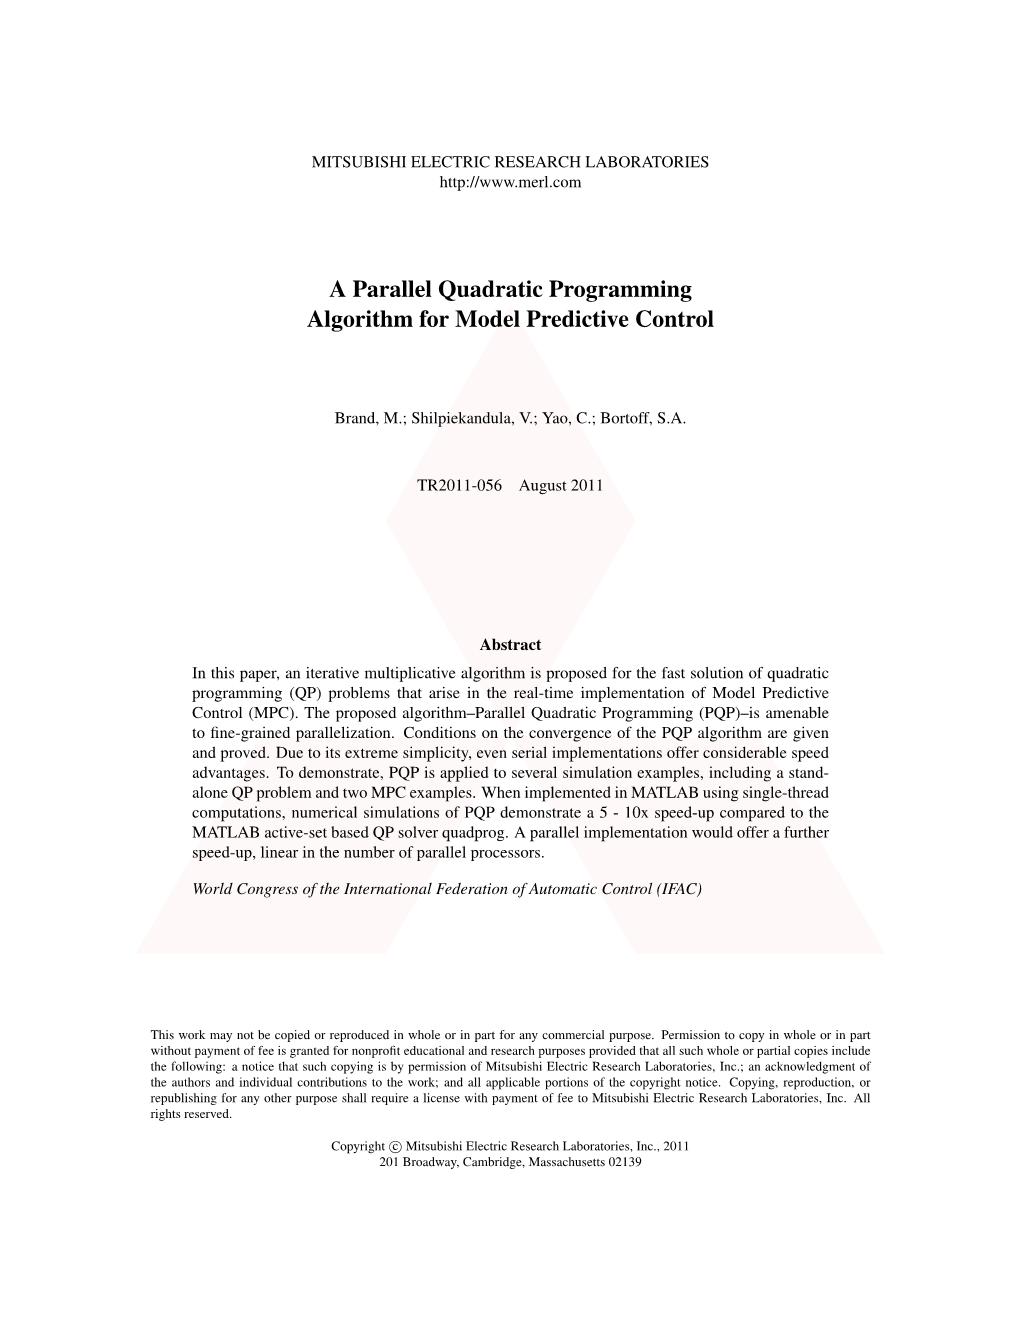 A Parallel Quadratic Programming Algorithm for Model Predictive Control